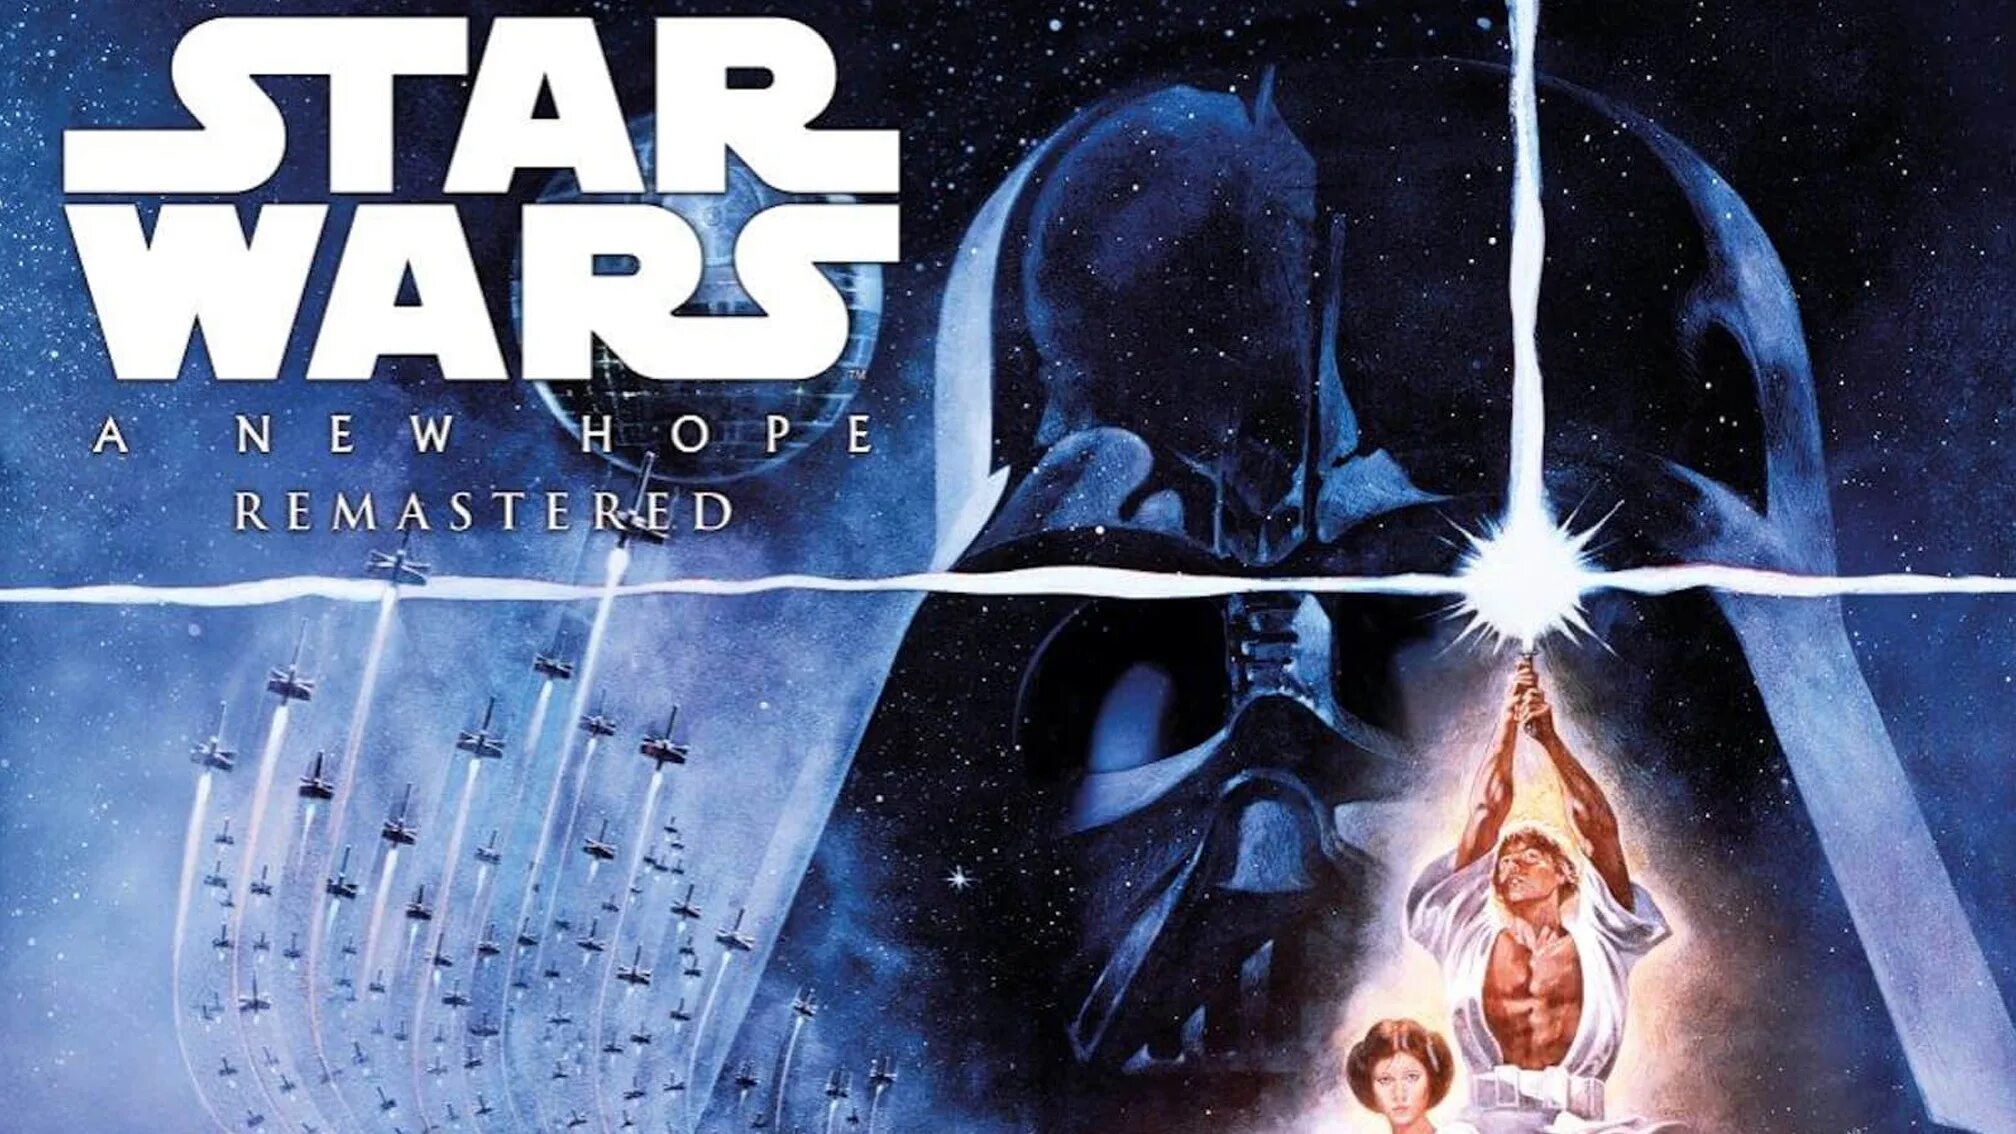 Star wars soundtrack. Звездные войны новый год. Star Wars OST. Звездные войны саундтрек. Джон Уильямс Звездные войны.